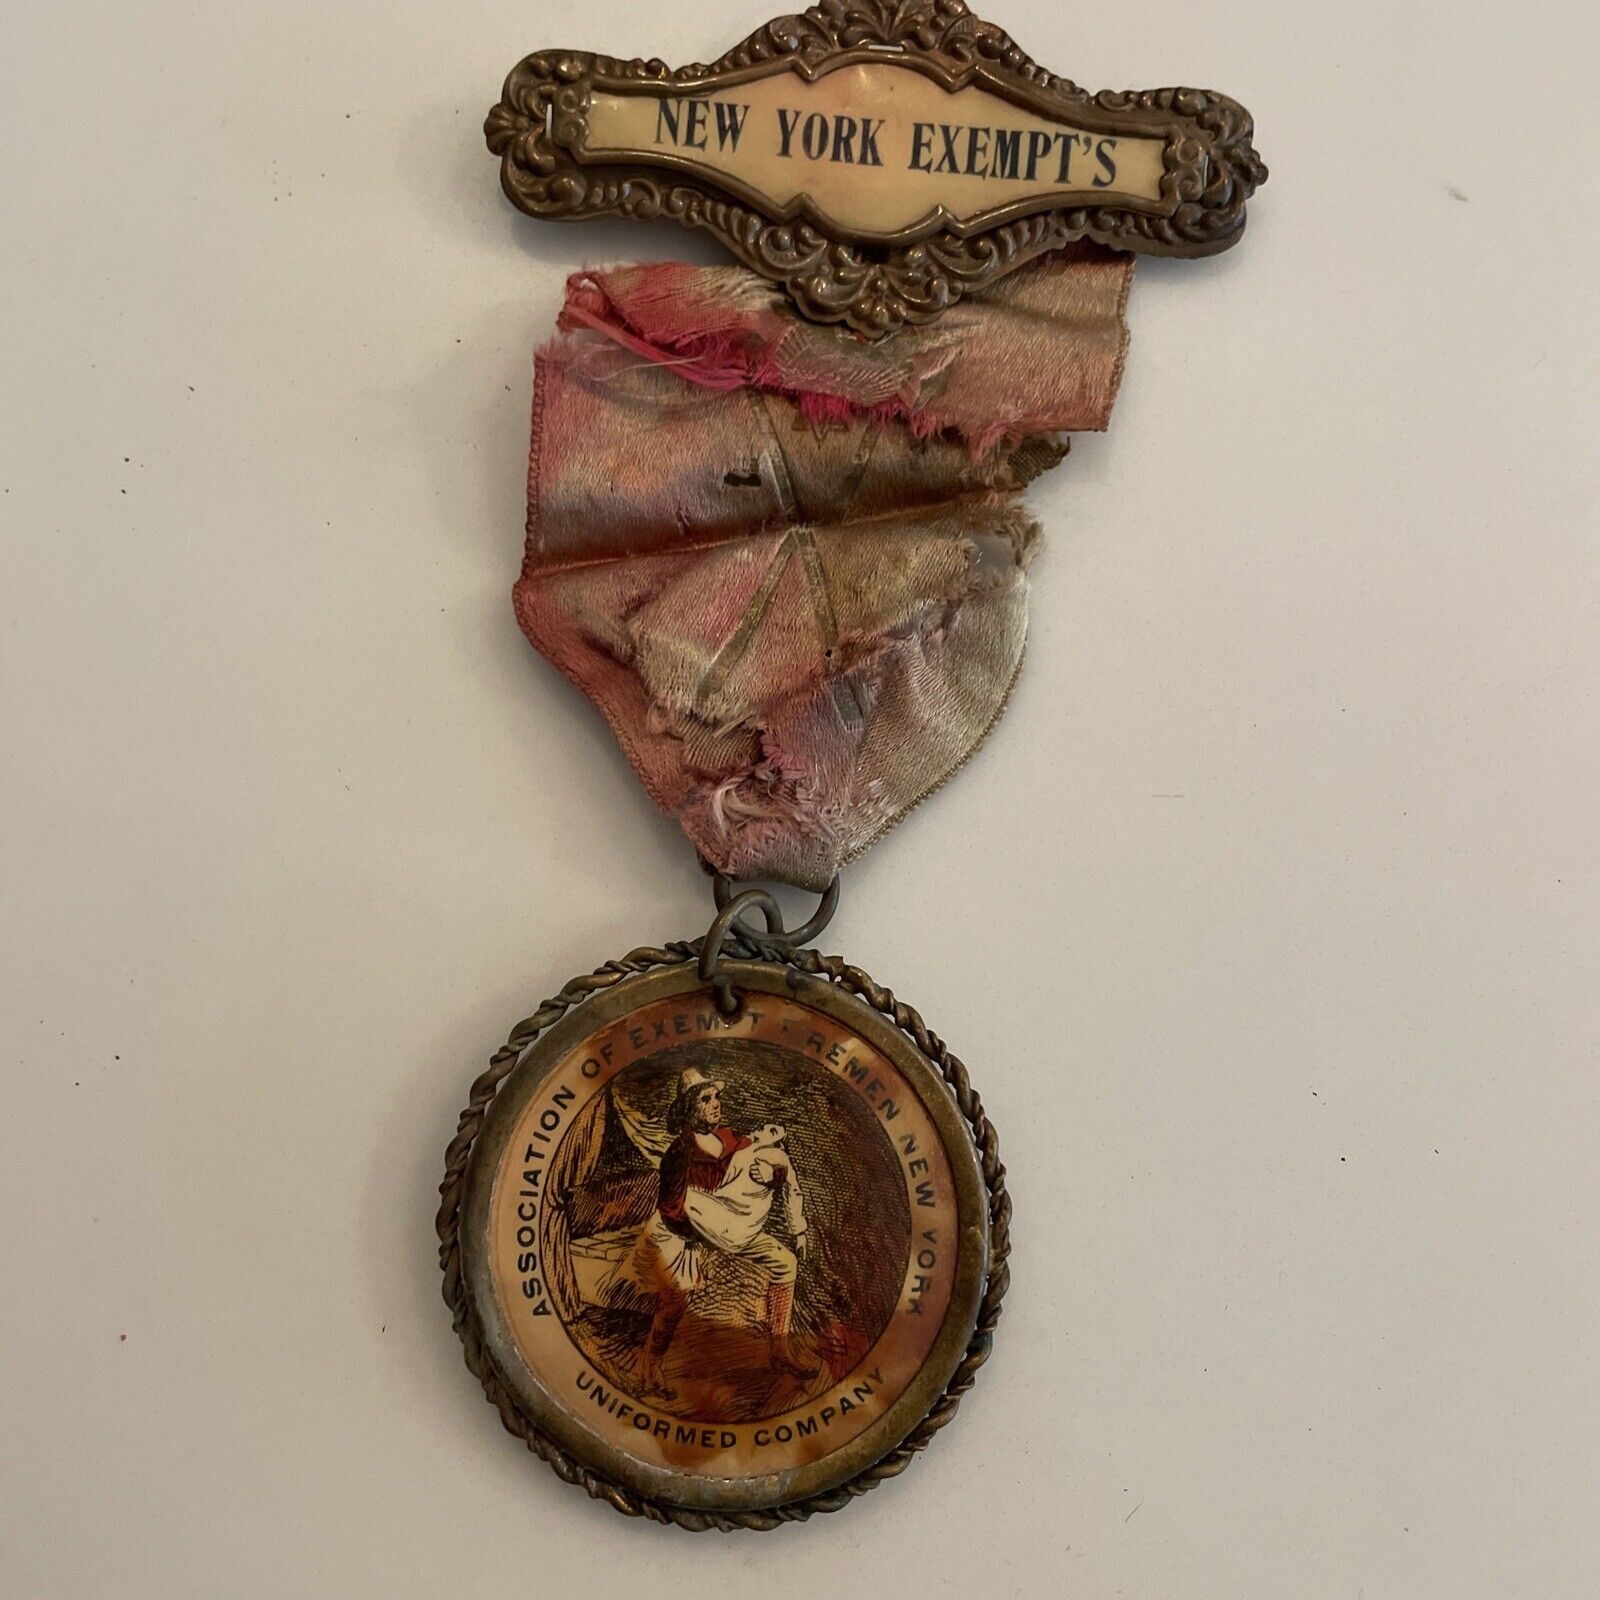 C.1907 Scarce New York City Fireman's Medal - Exempt Firemen